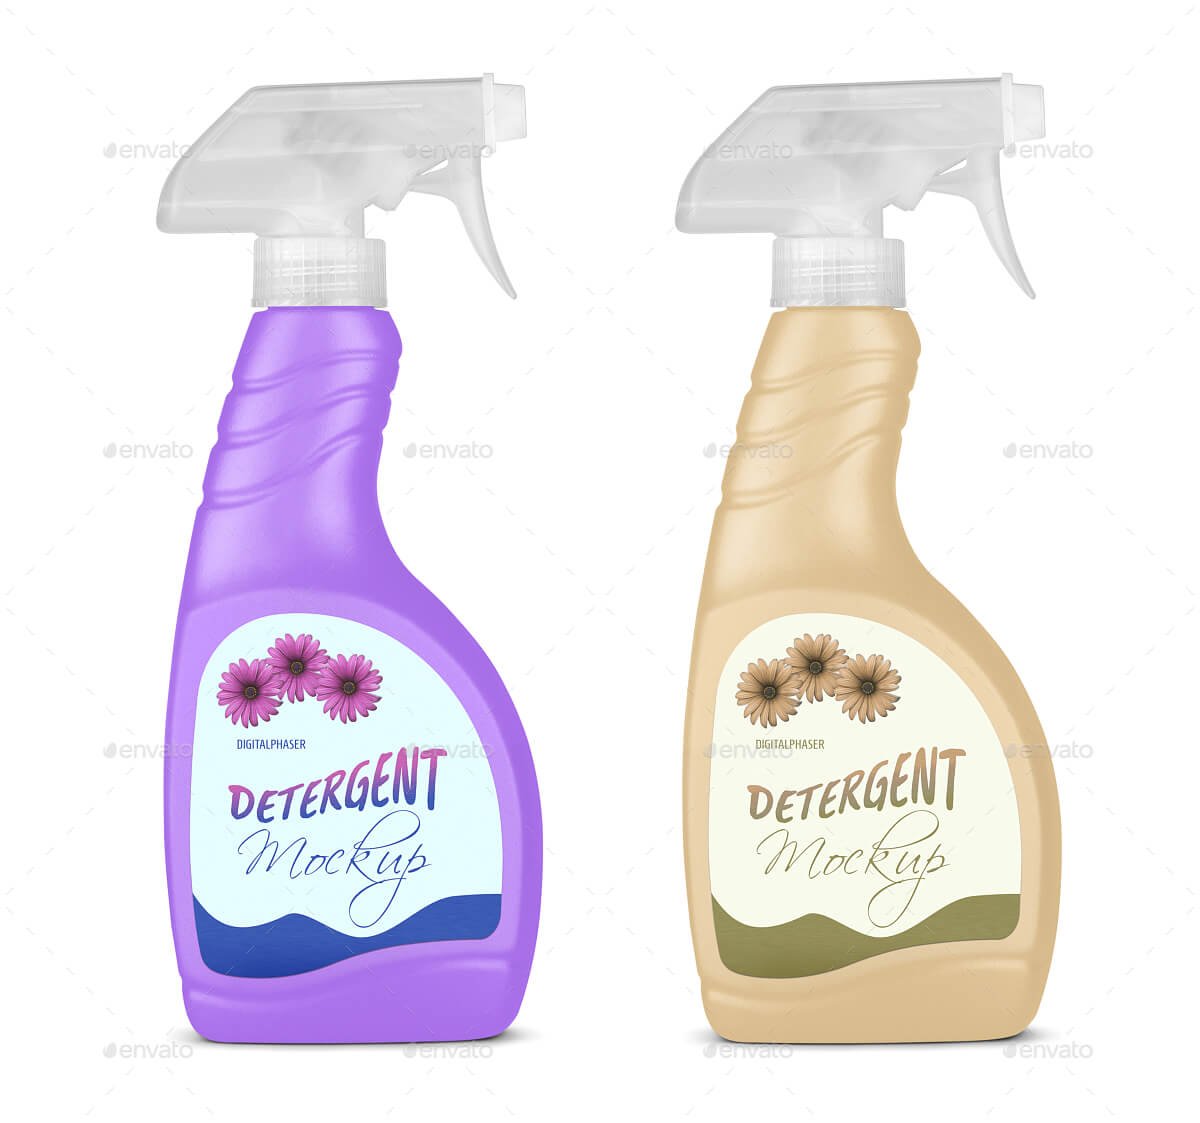 Detergent Spray Bottle Mockup